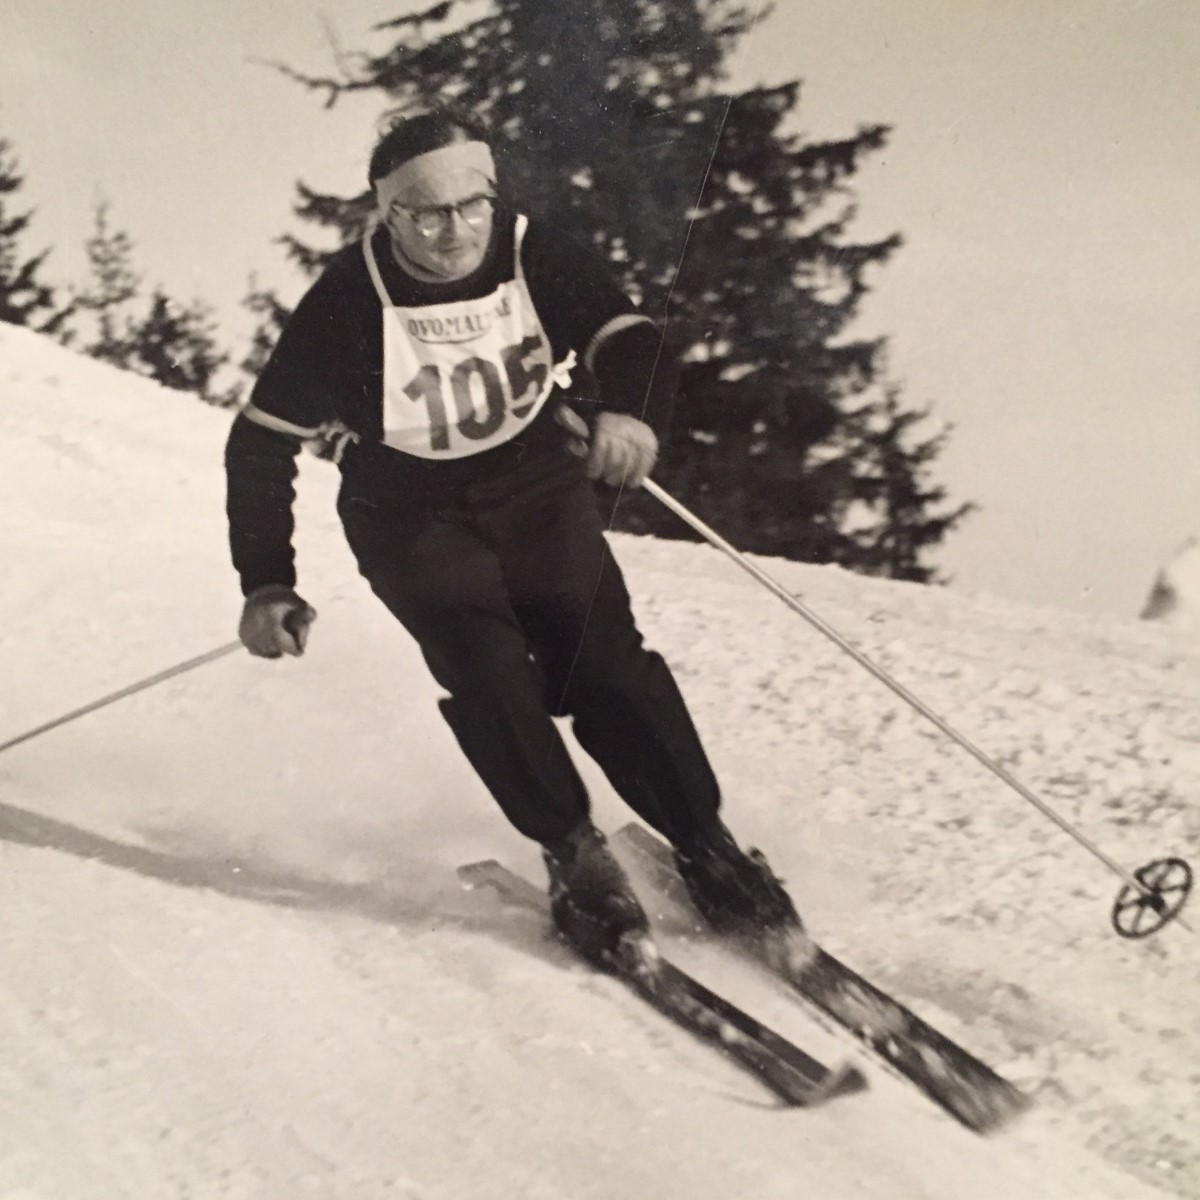 Frank Prihoda skiiing